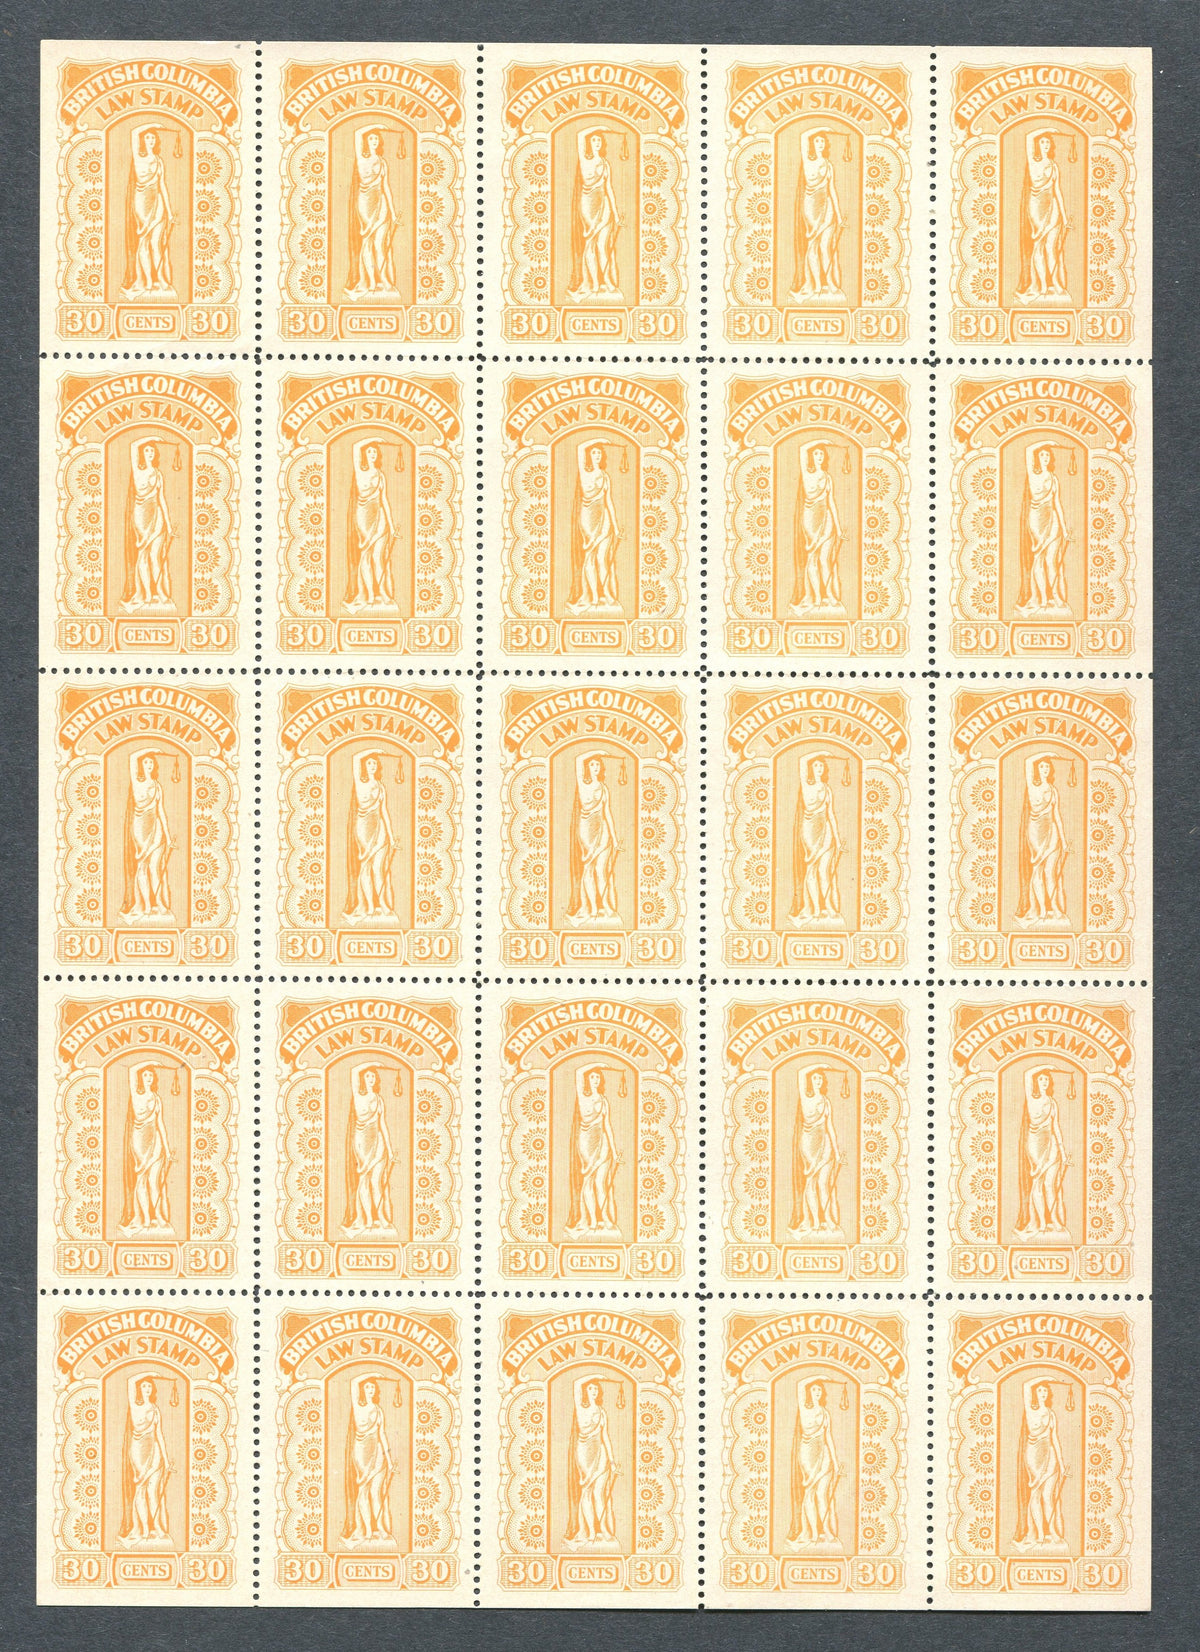 0038BC1709 - BCL38 - Mint Sheet of 25